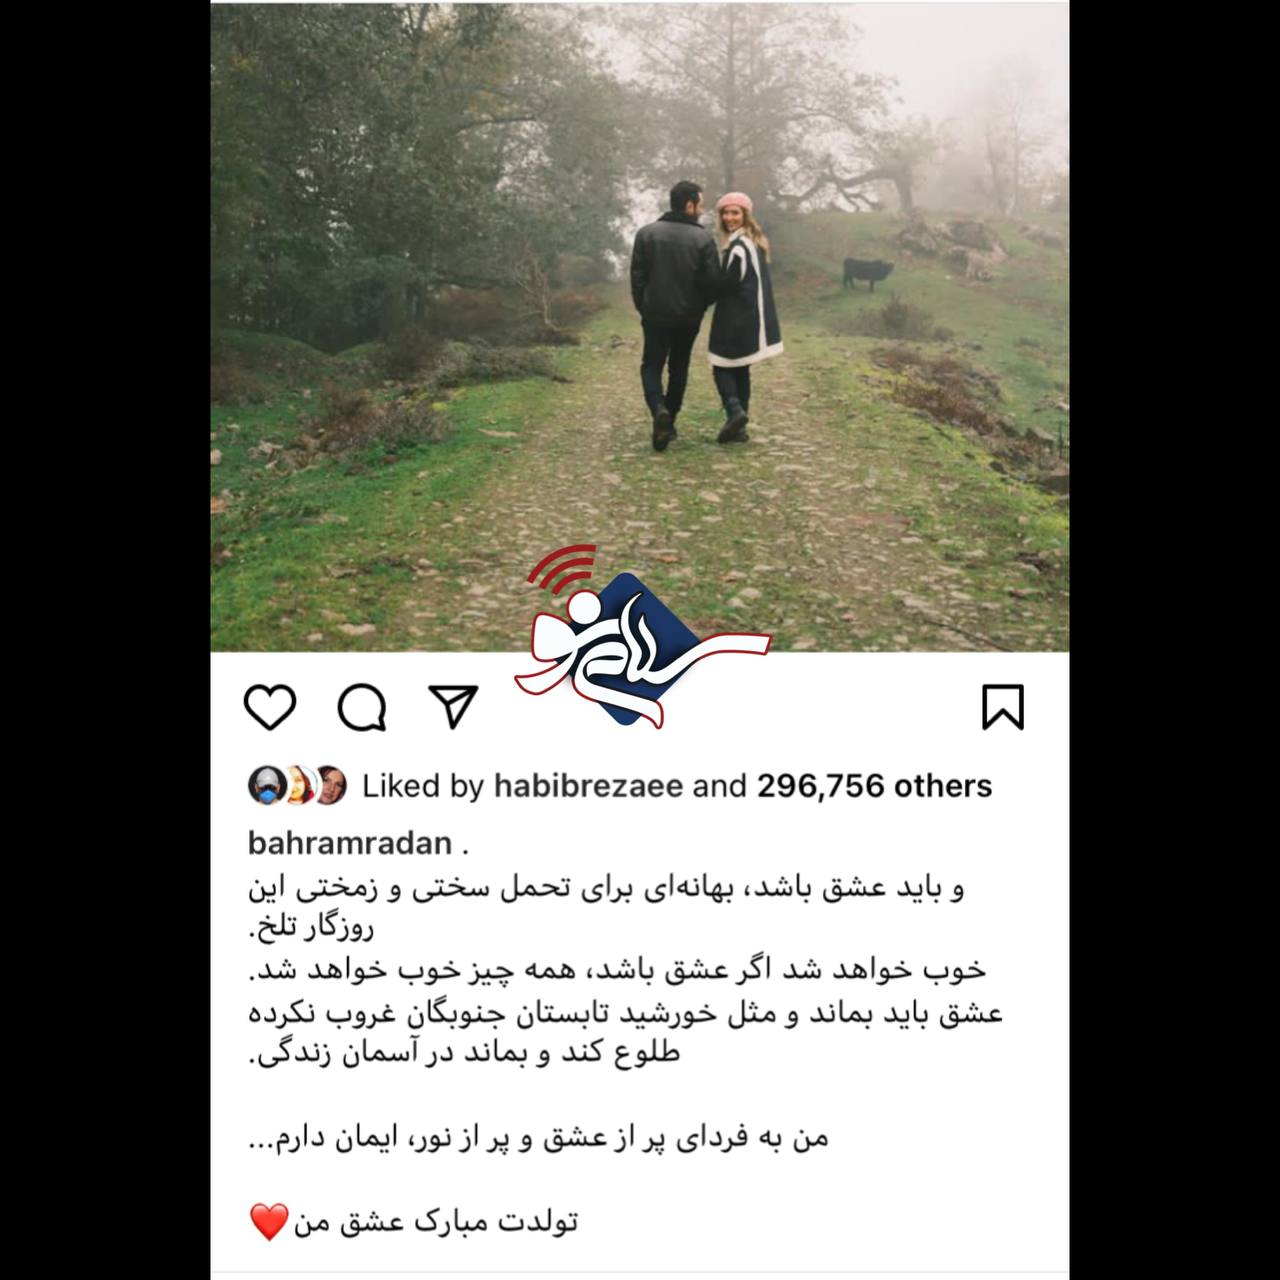 عکس عاشقانه لو رفته بهرام رادان و همسرش در جنگل + عکس